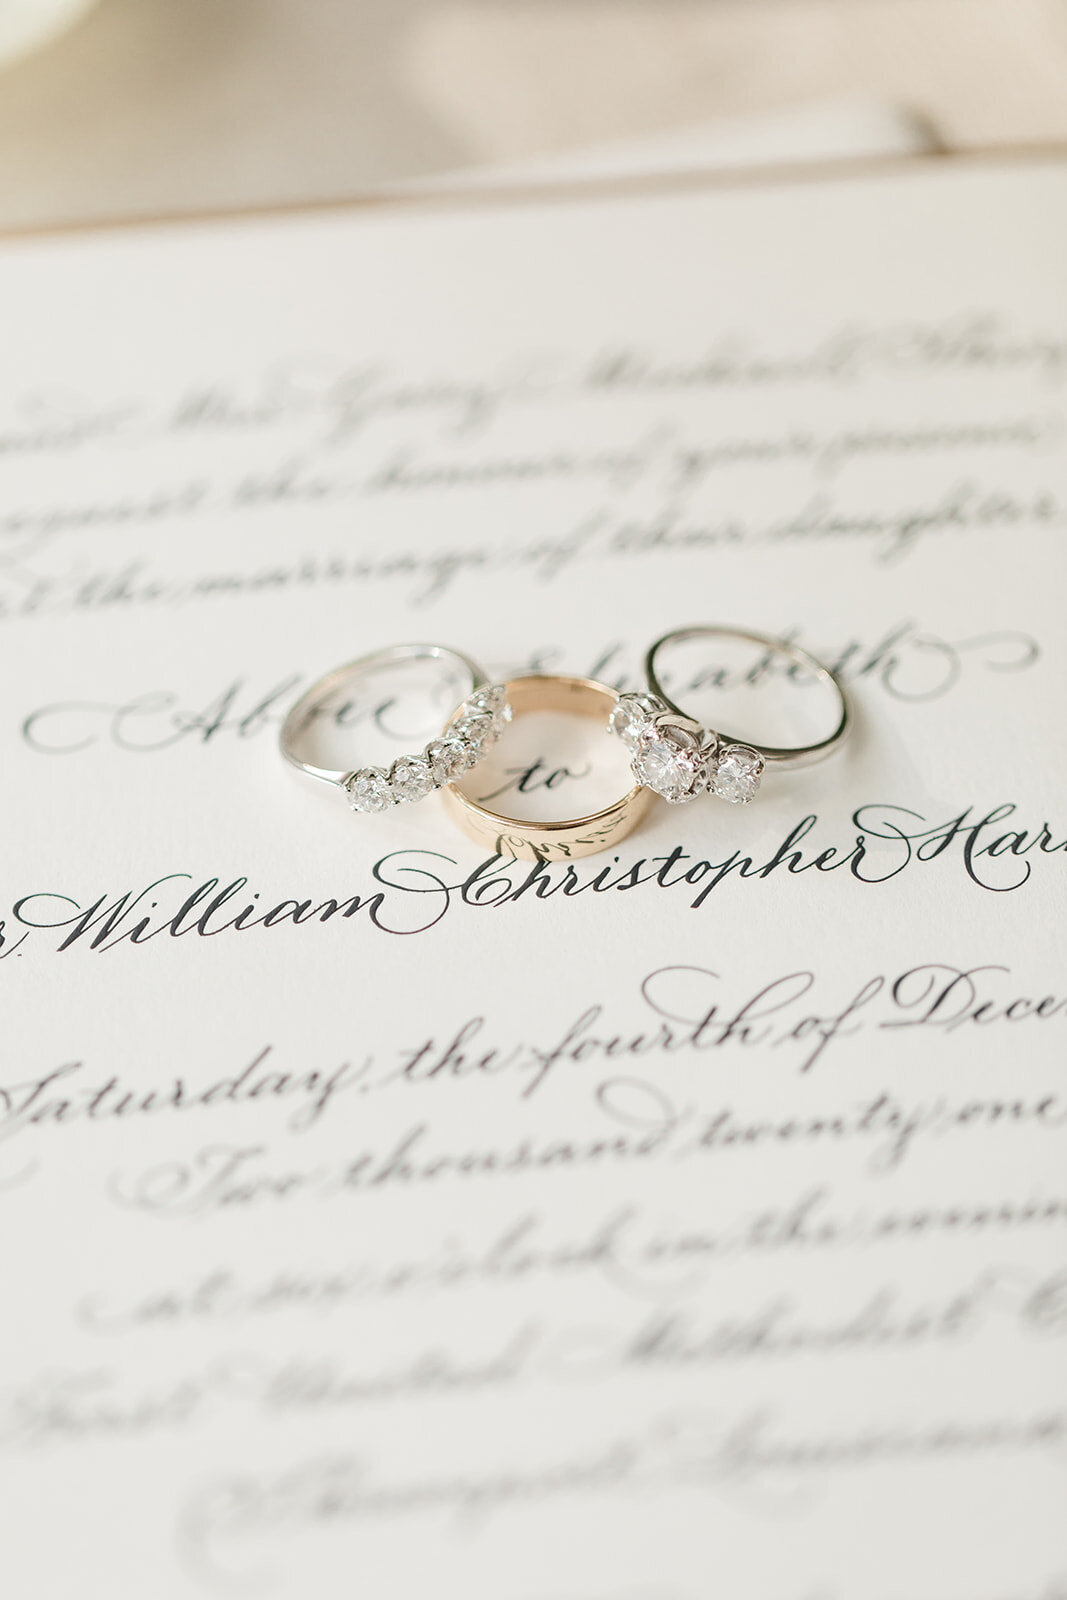 Wedding rings laying on wedding invitation